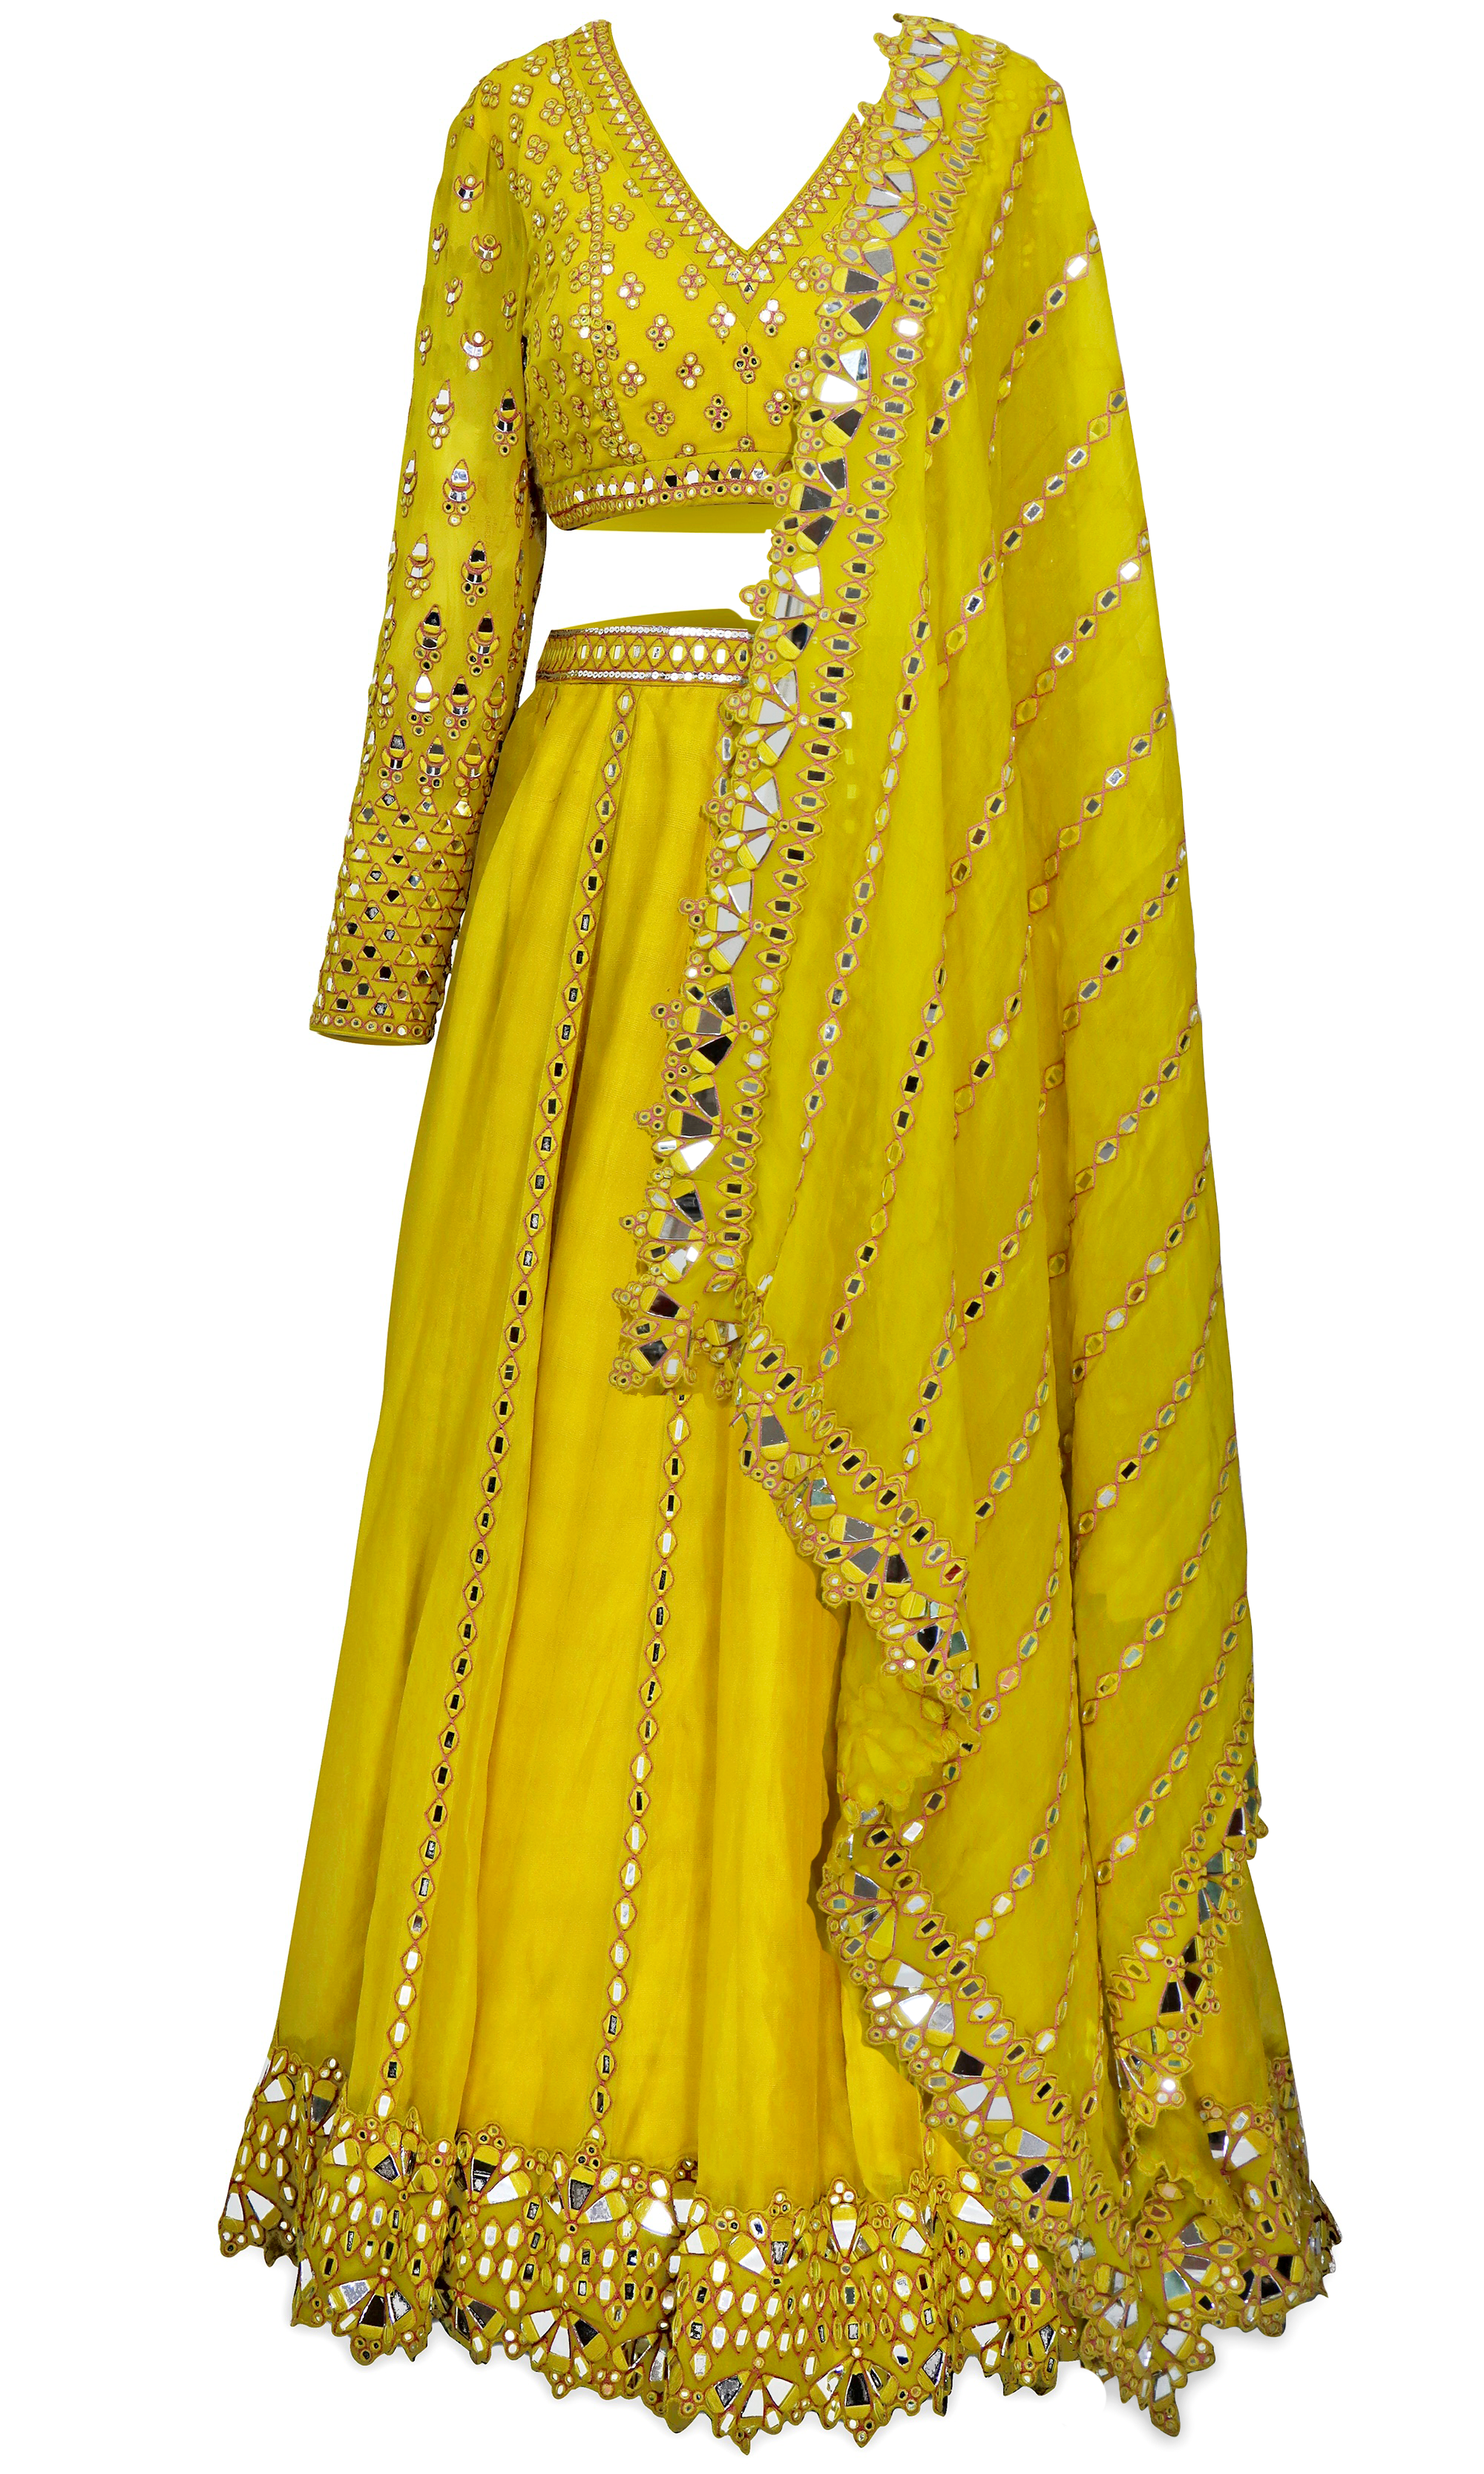 Moss Green/yellow 3-piece lehenga set including skirt, blouse, and dupatta